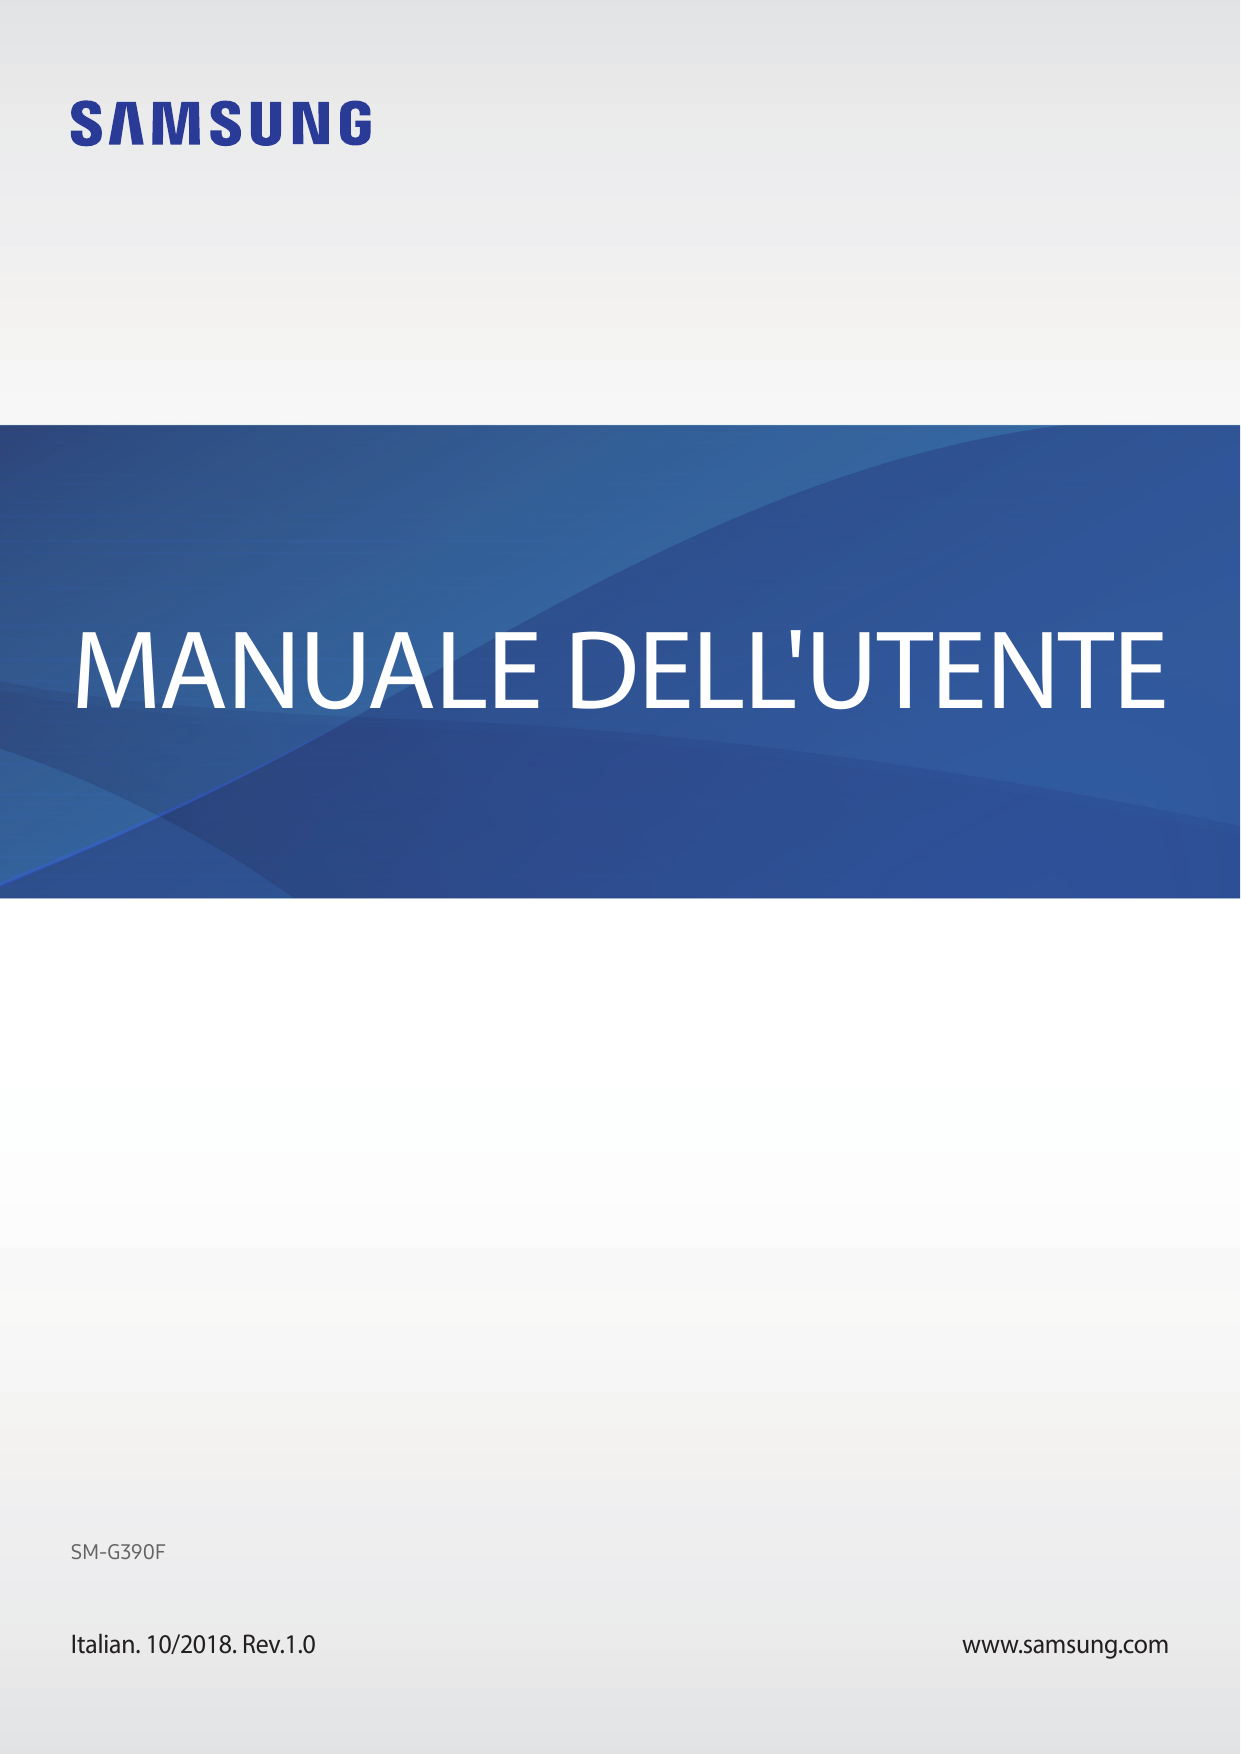 MANUALE DELL'UTENTESM-G390FItalian. 10/2018. Rev.1.0www.samsung.com